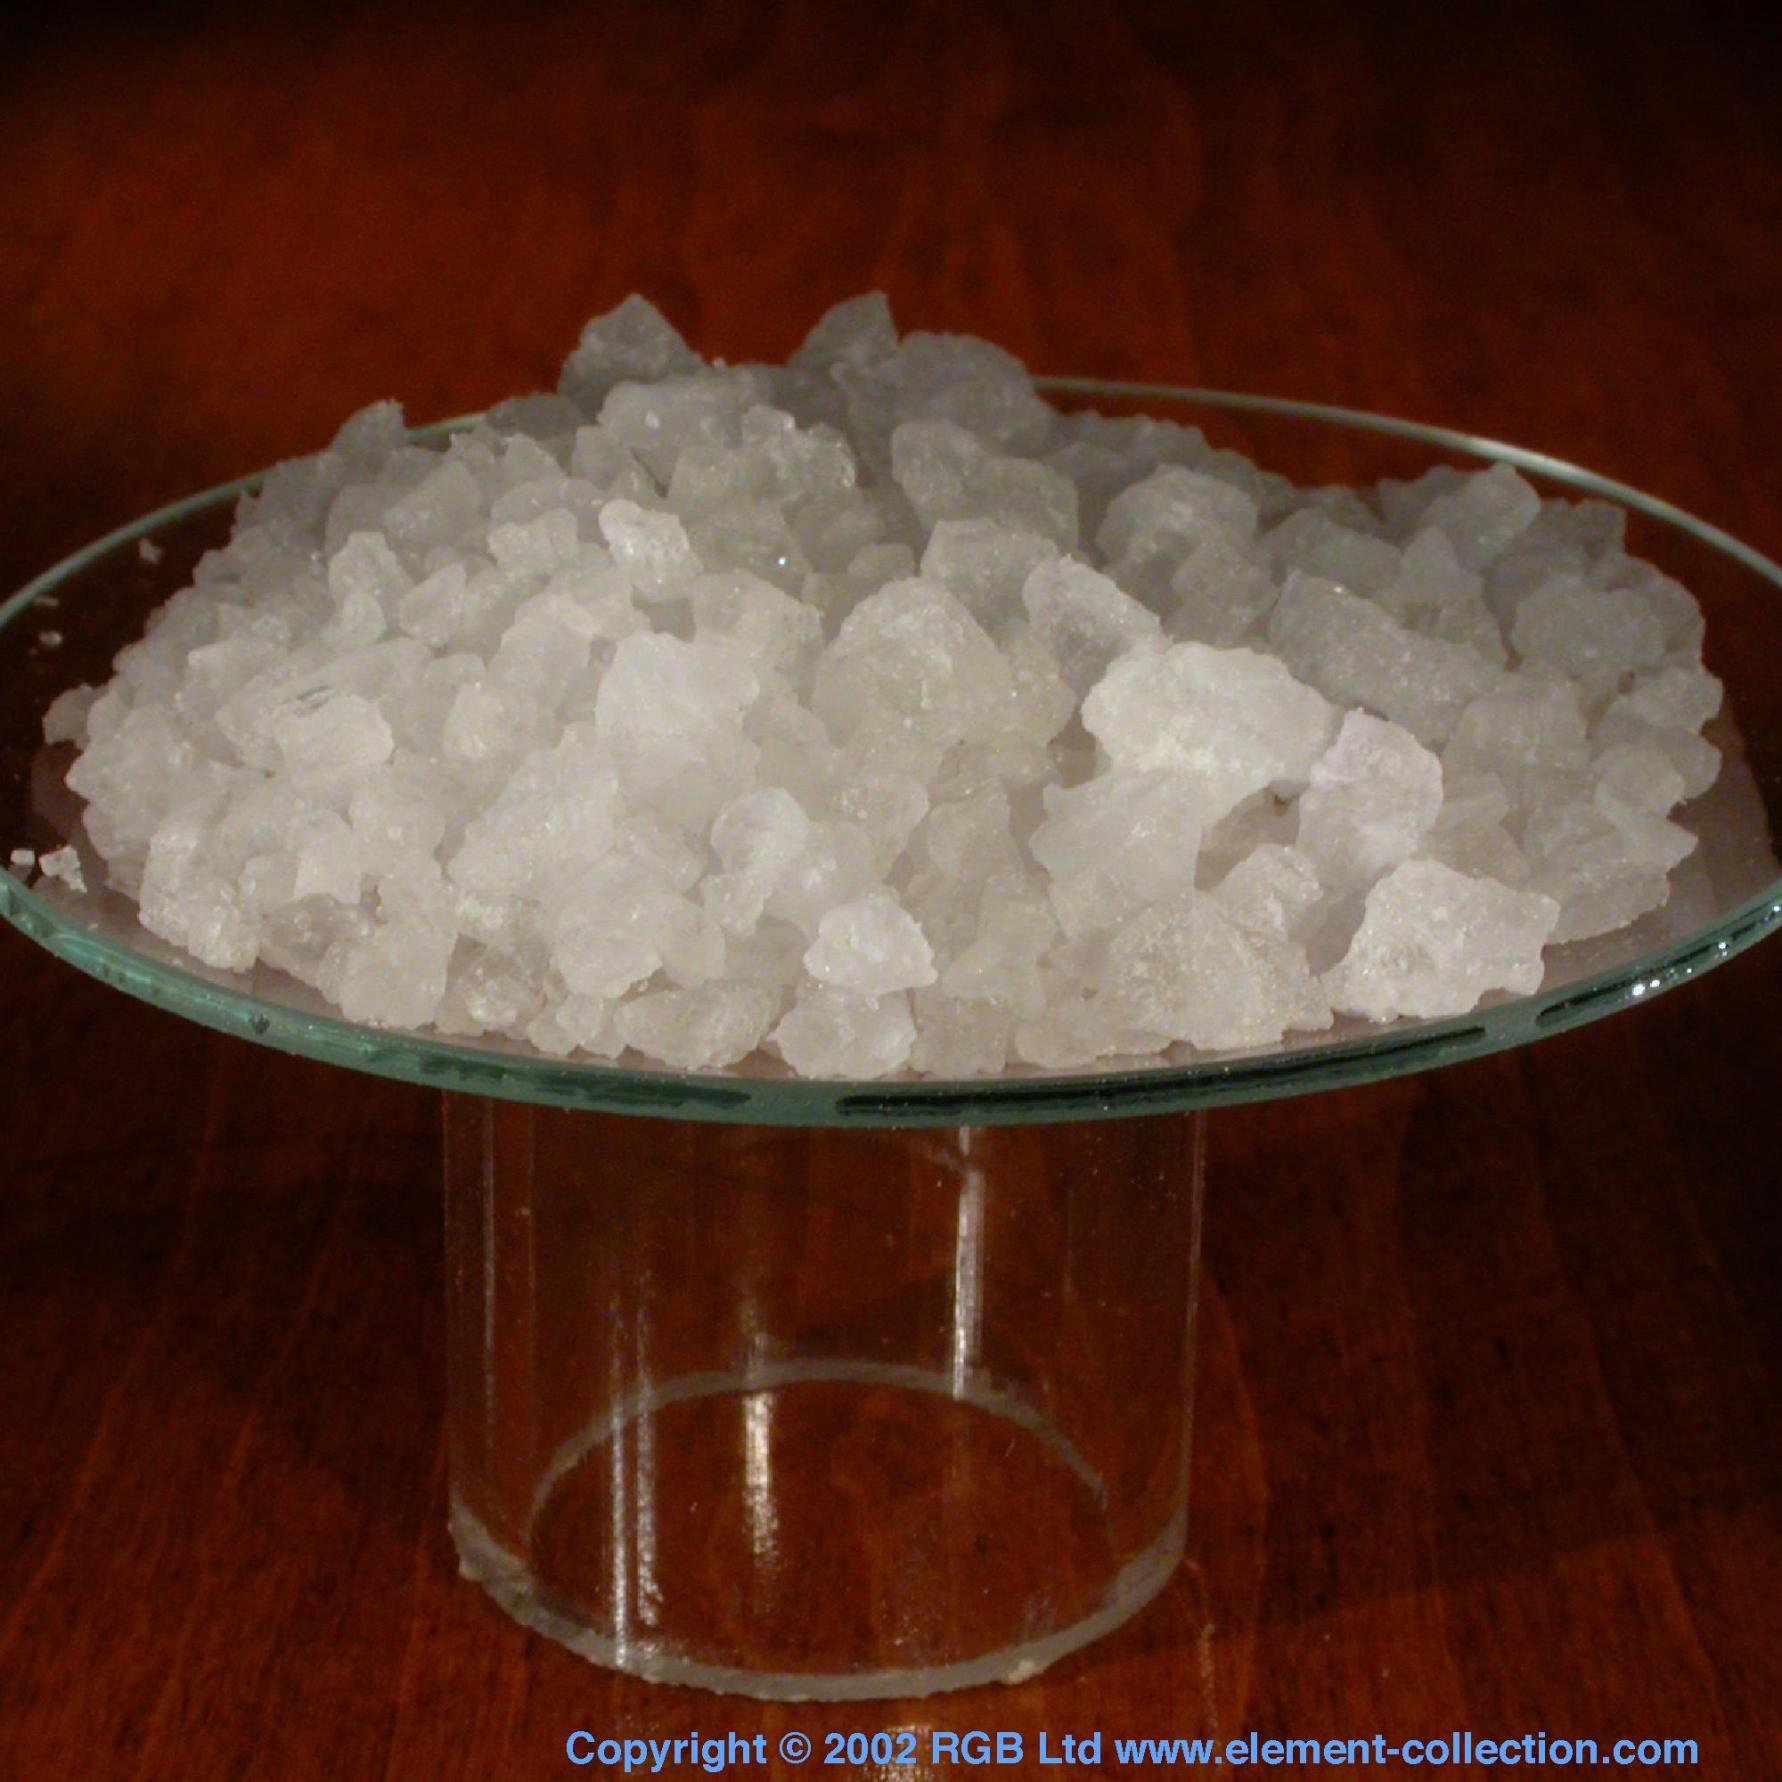 Sodium Rock salt